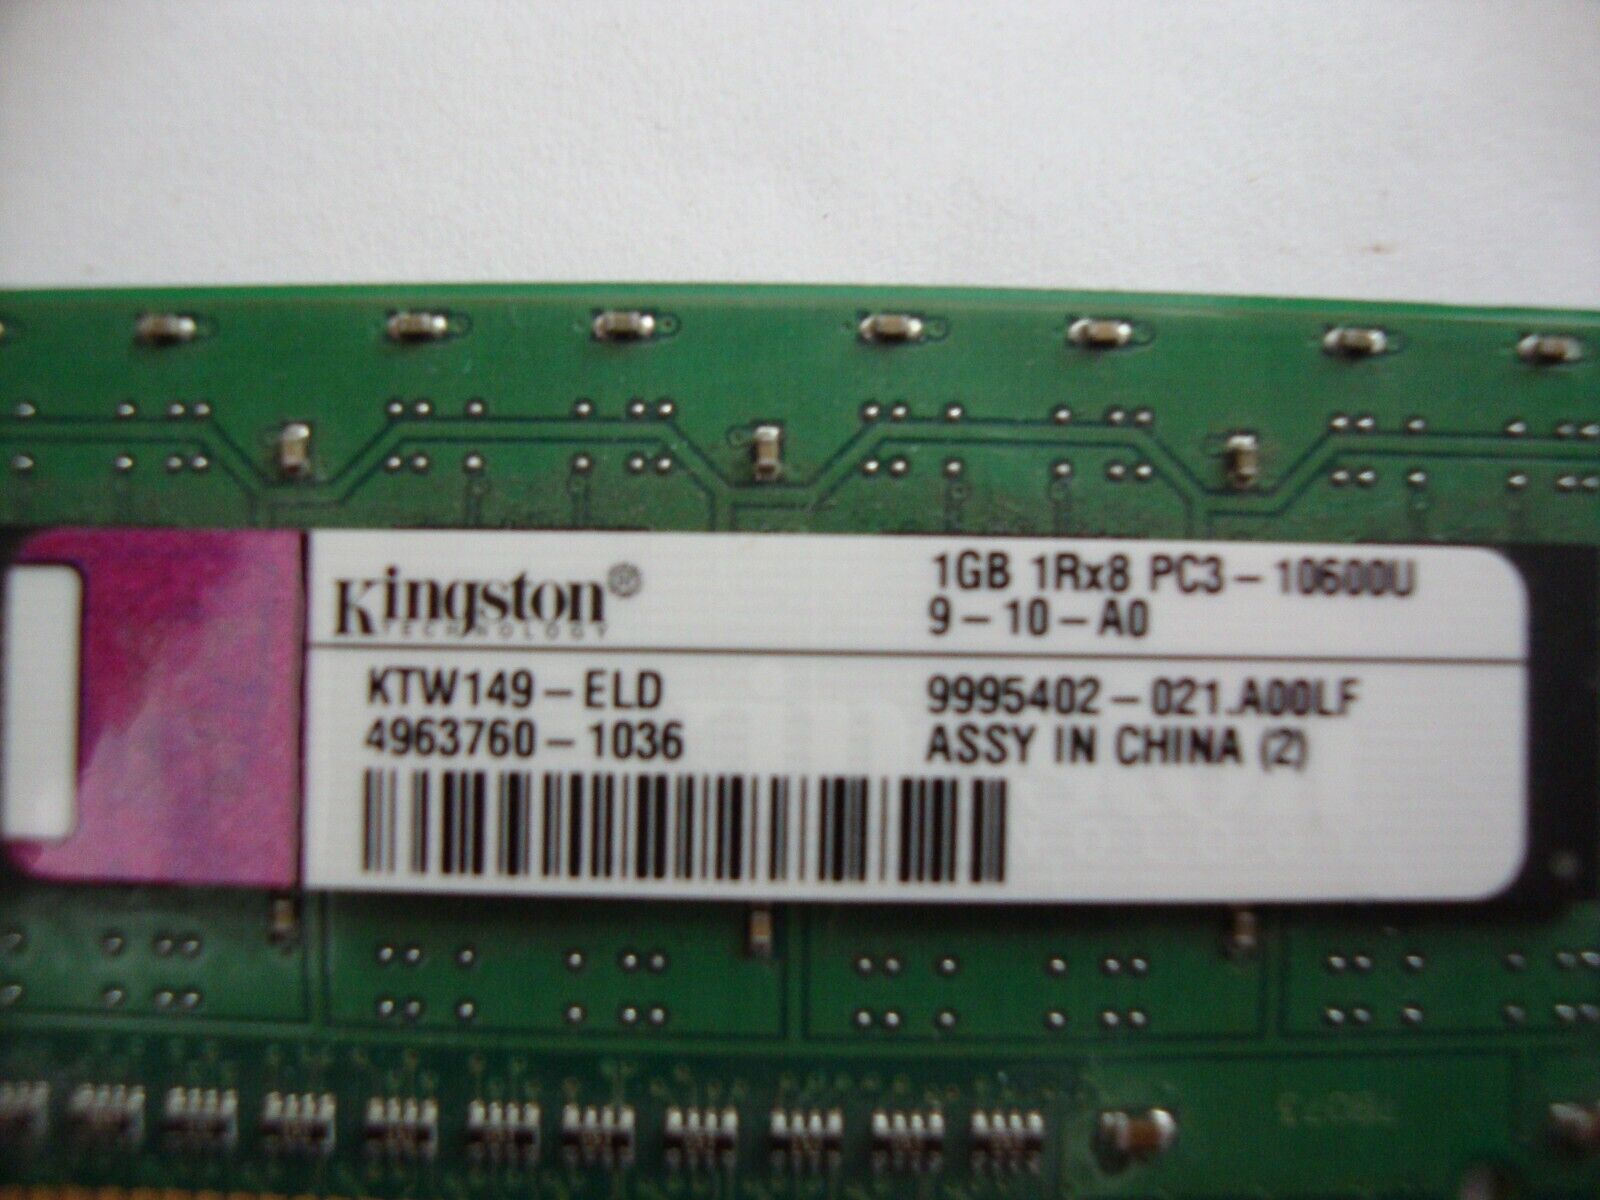 Kingston Technology Company, KTW149-ELD, 1GB